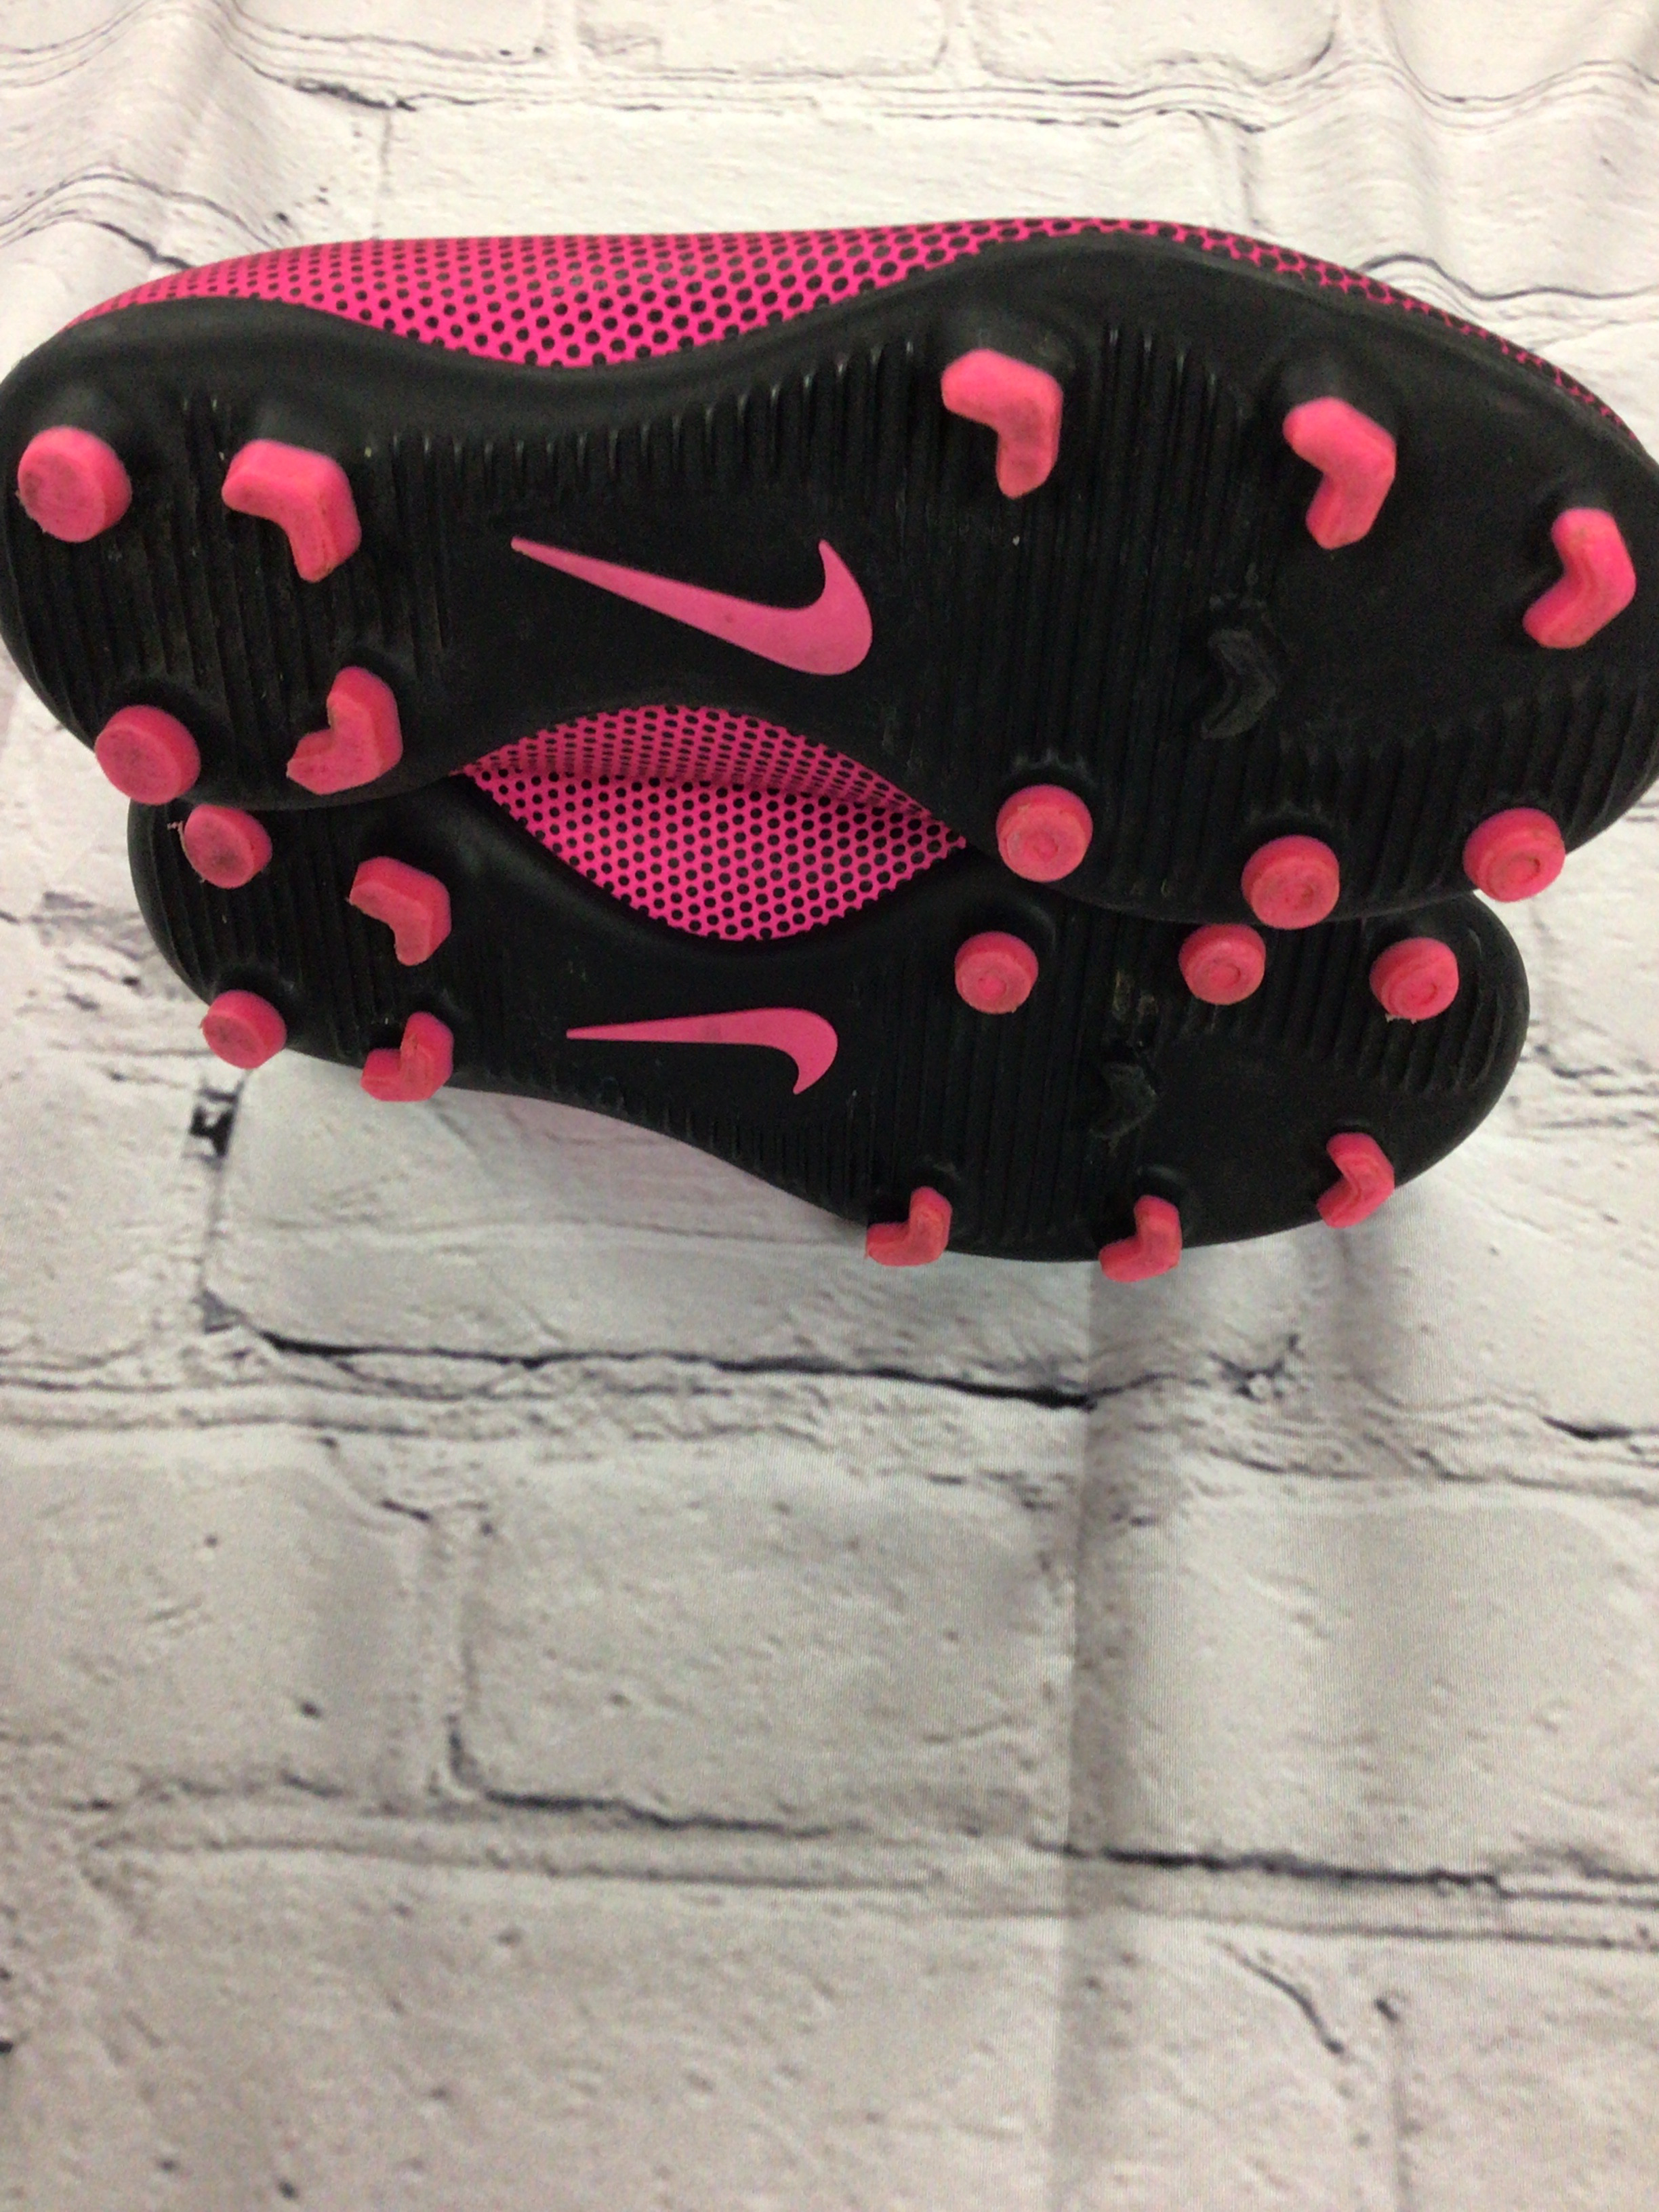 Nike Girls Soccer Cleats Pink Dot sz 11 c